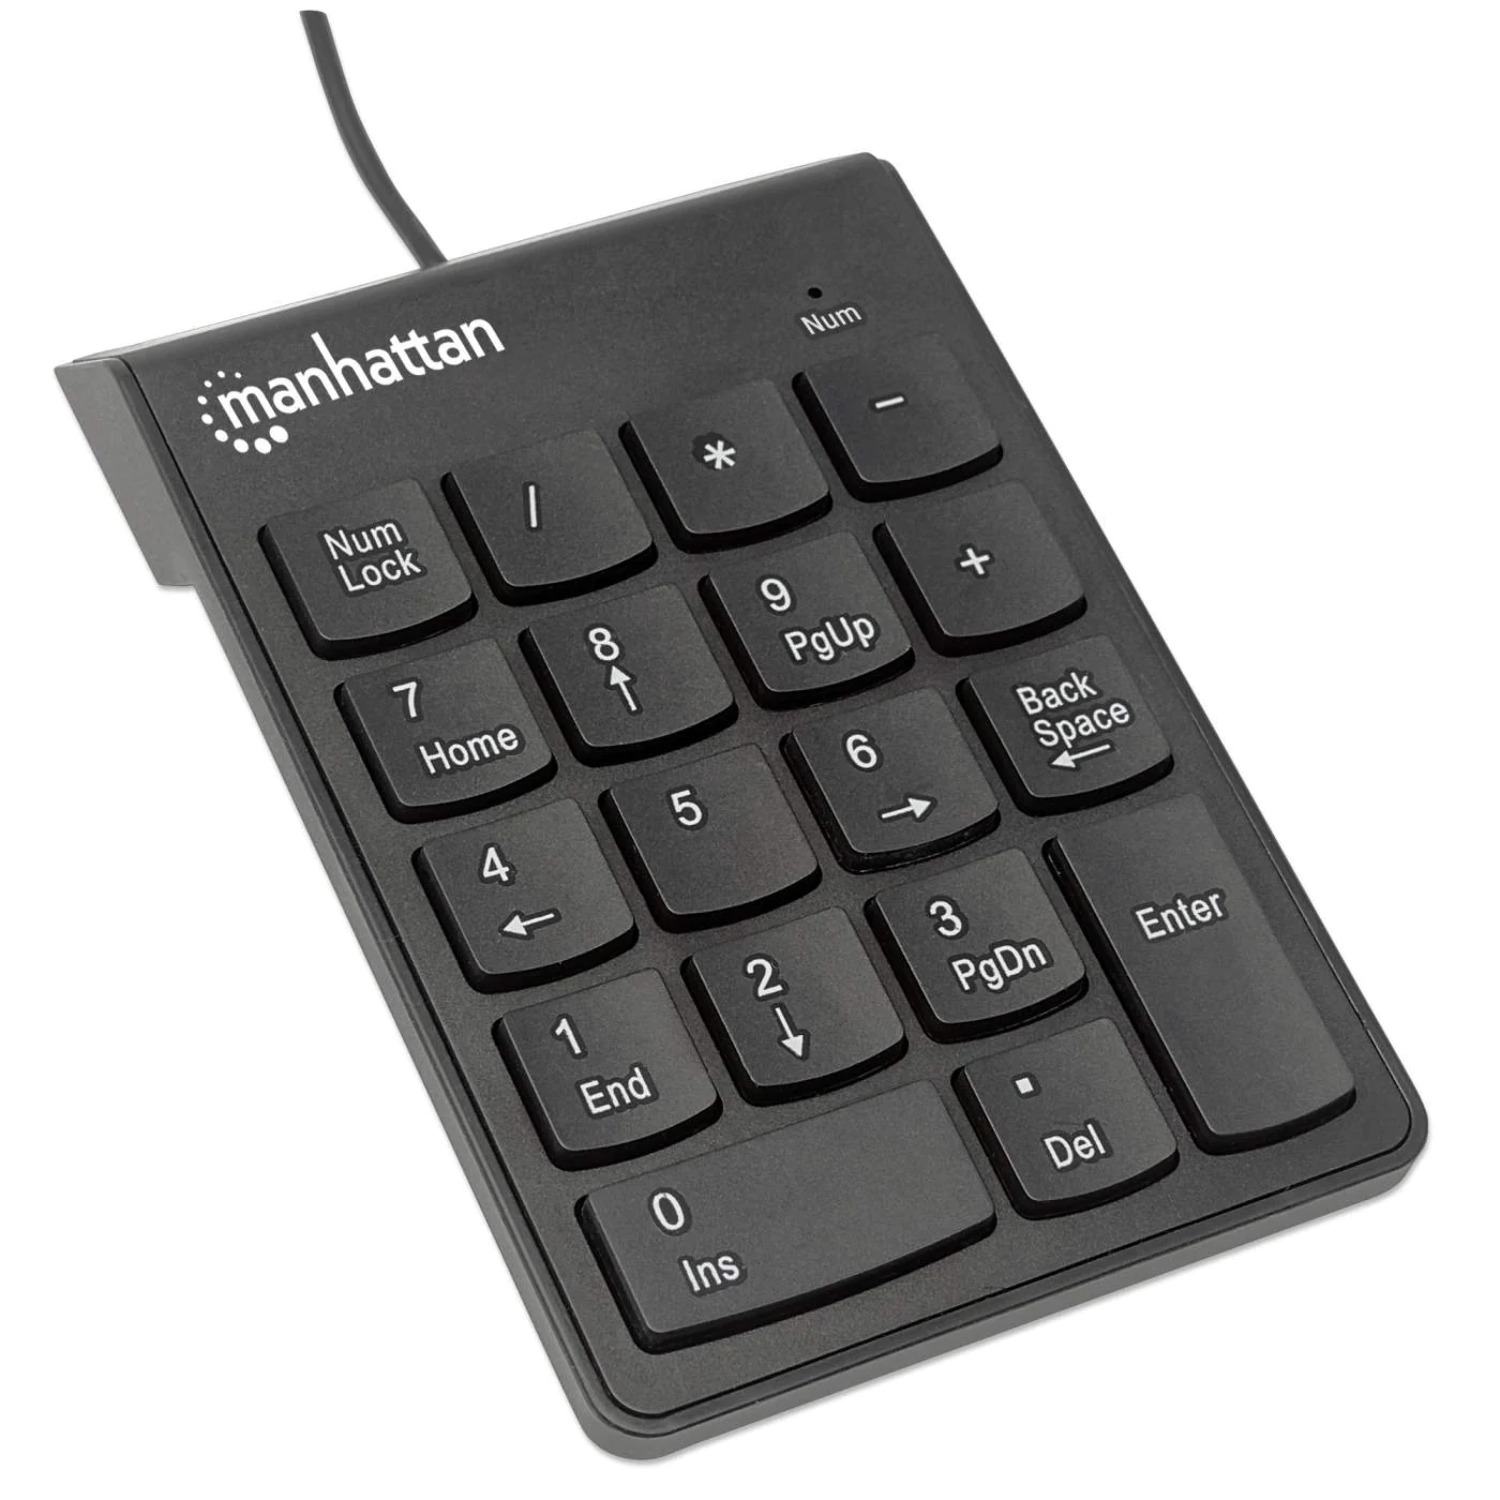 Manhattan USB Numeric Keypad with 18 Full-size keys - image 2 of 4